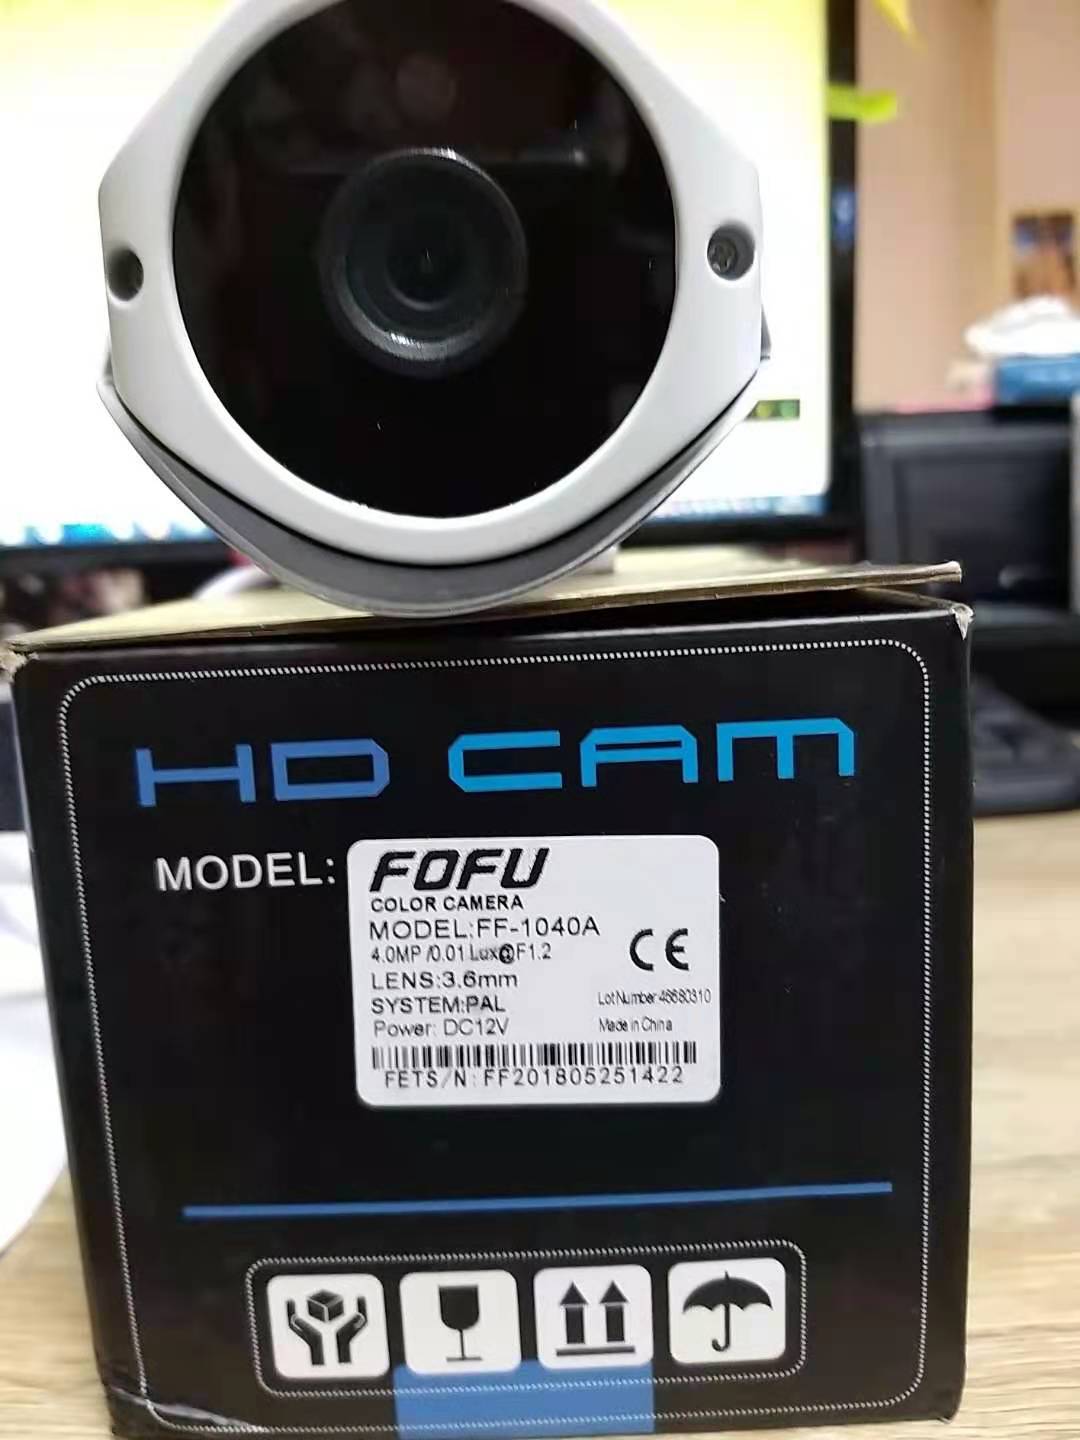 FF-1040Aกล้องHD Camera (ความละเอียด 4 ล้านพิกเซล)เชื่อมต่อได้4ระบบAHD IP TVI DIS(รับประกัน 1 ปี)